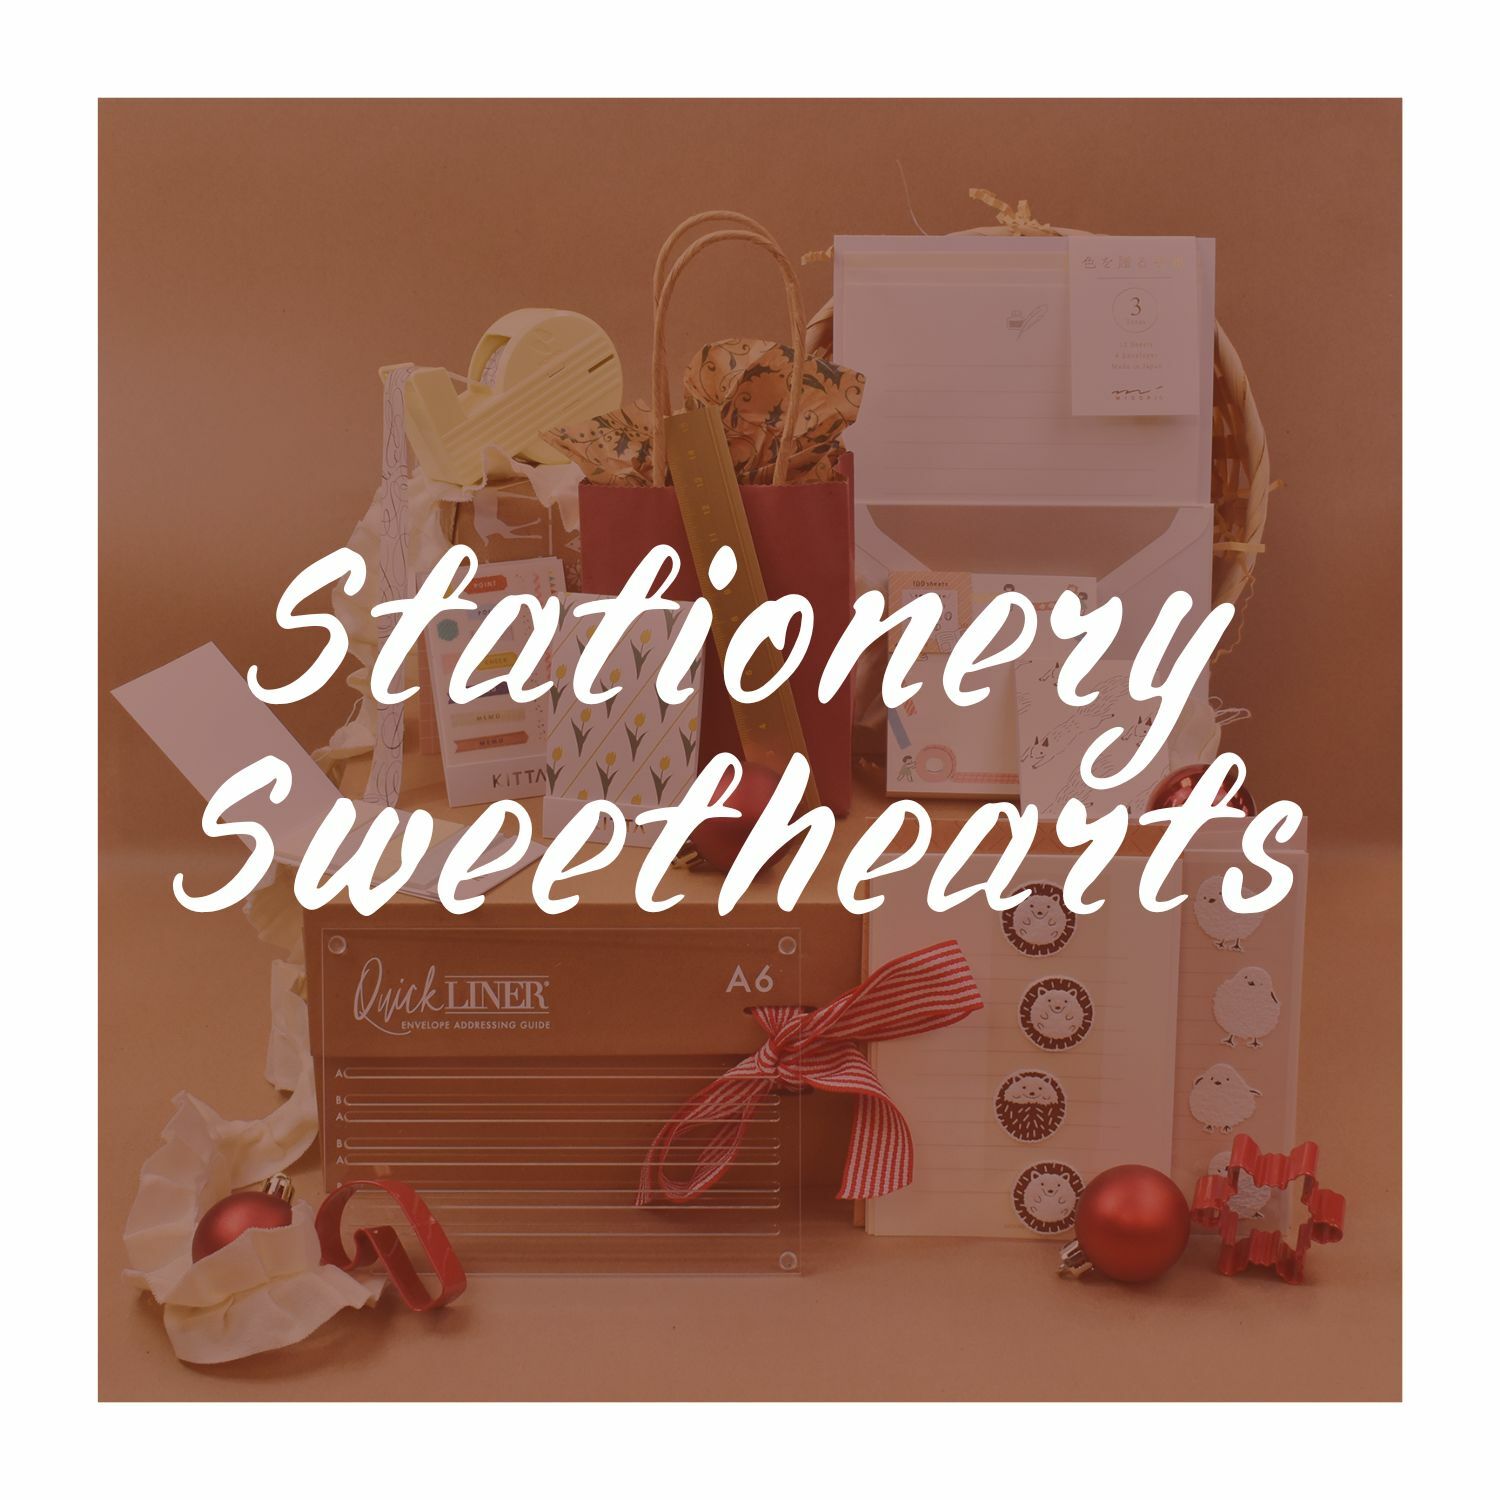 Stationery Sweethearts